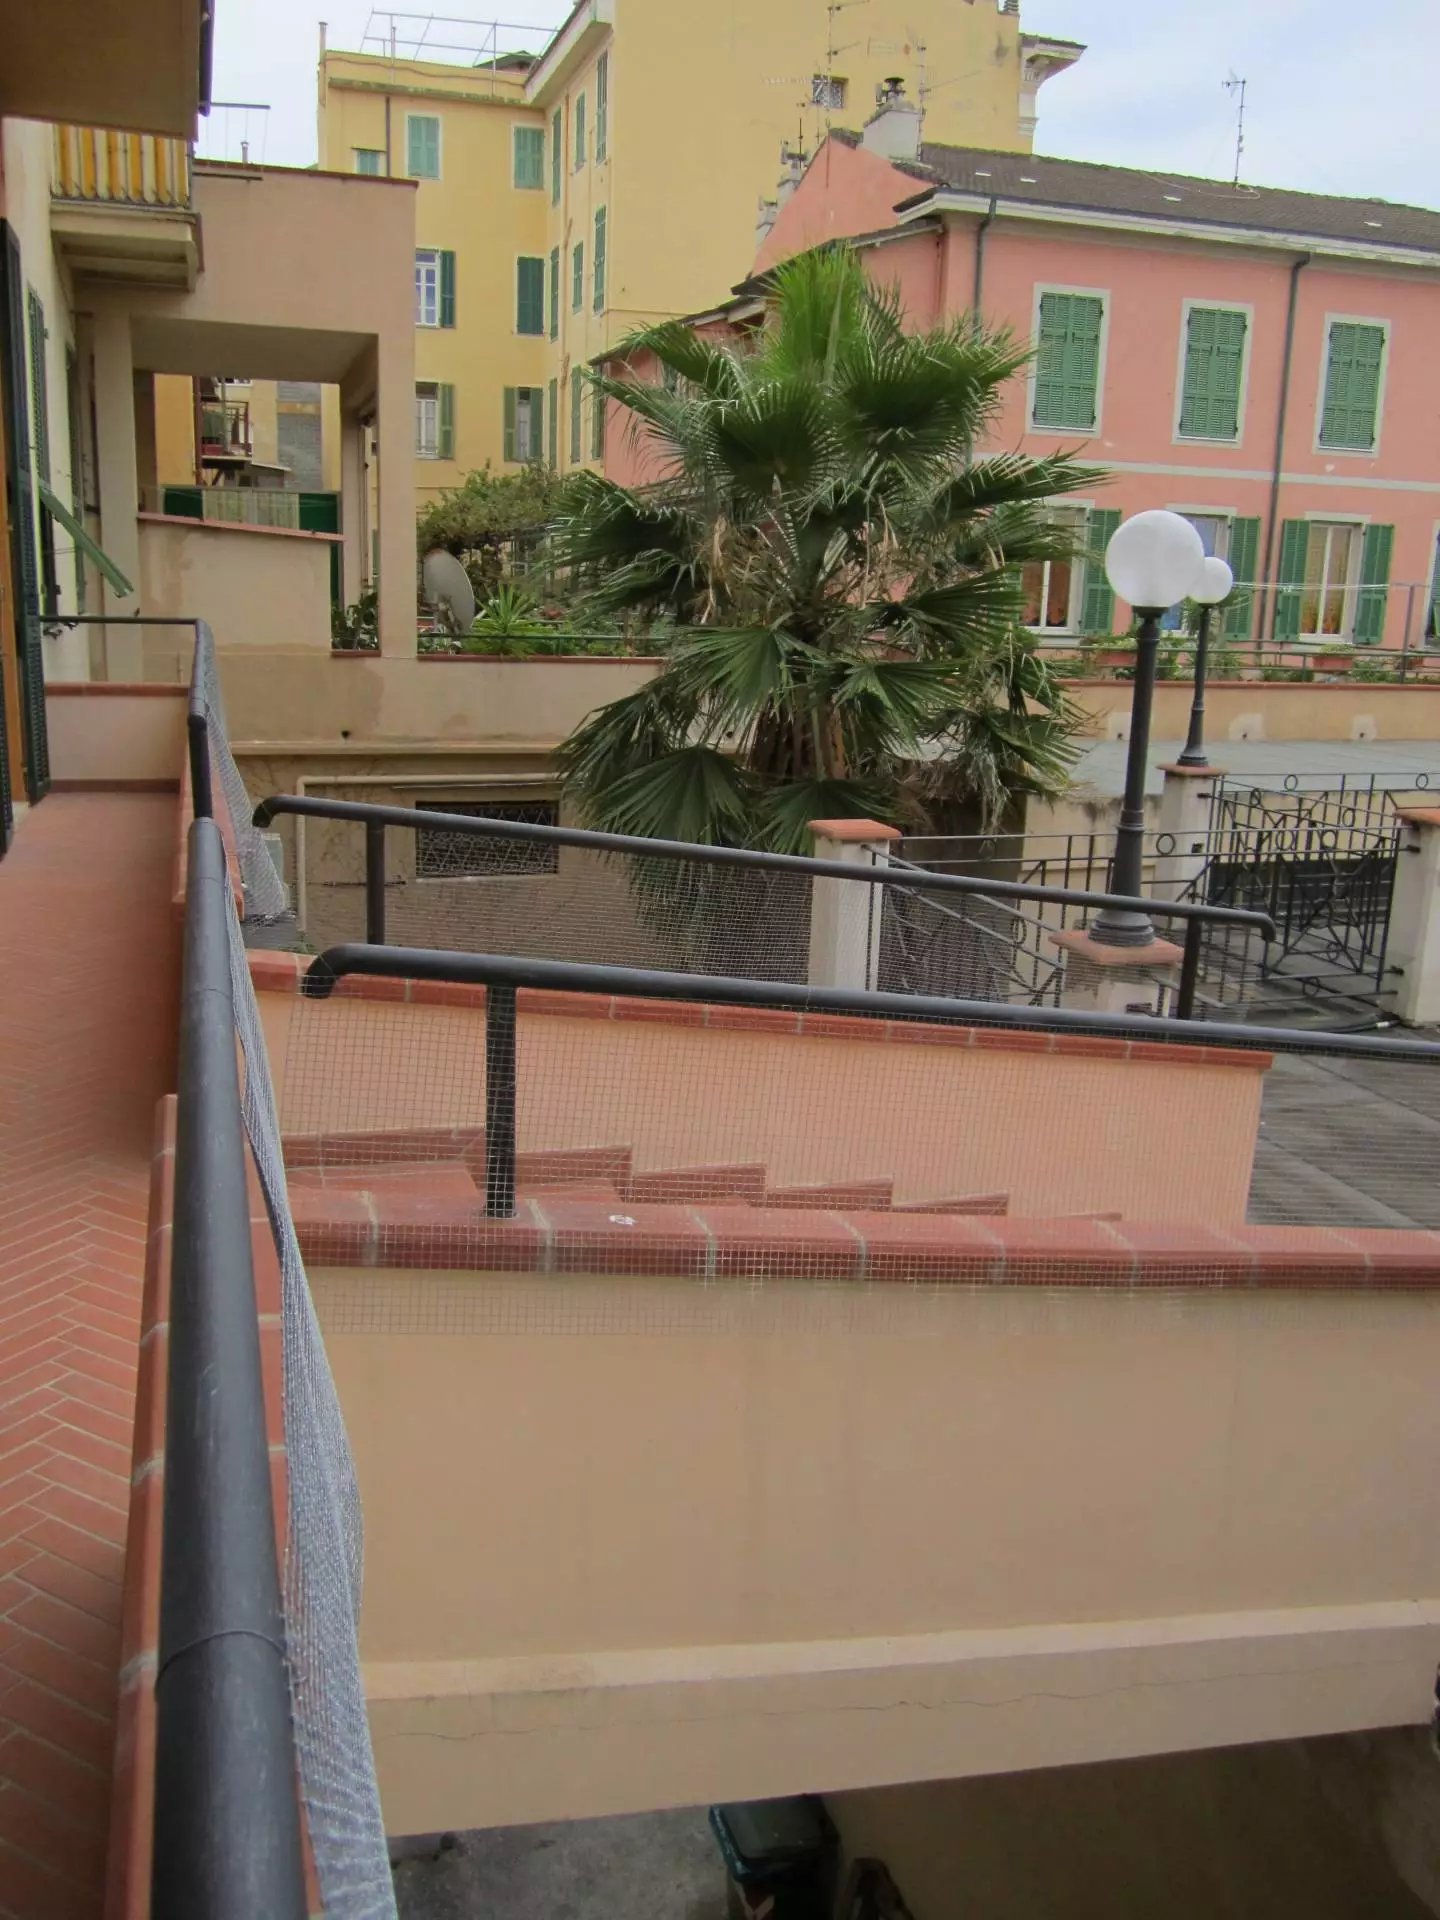 Sale Apartment - Bordighera - Italy